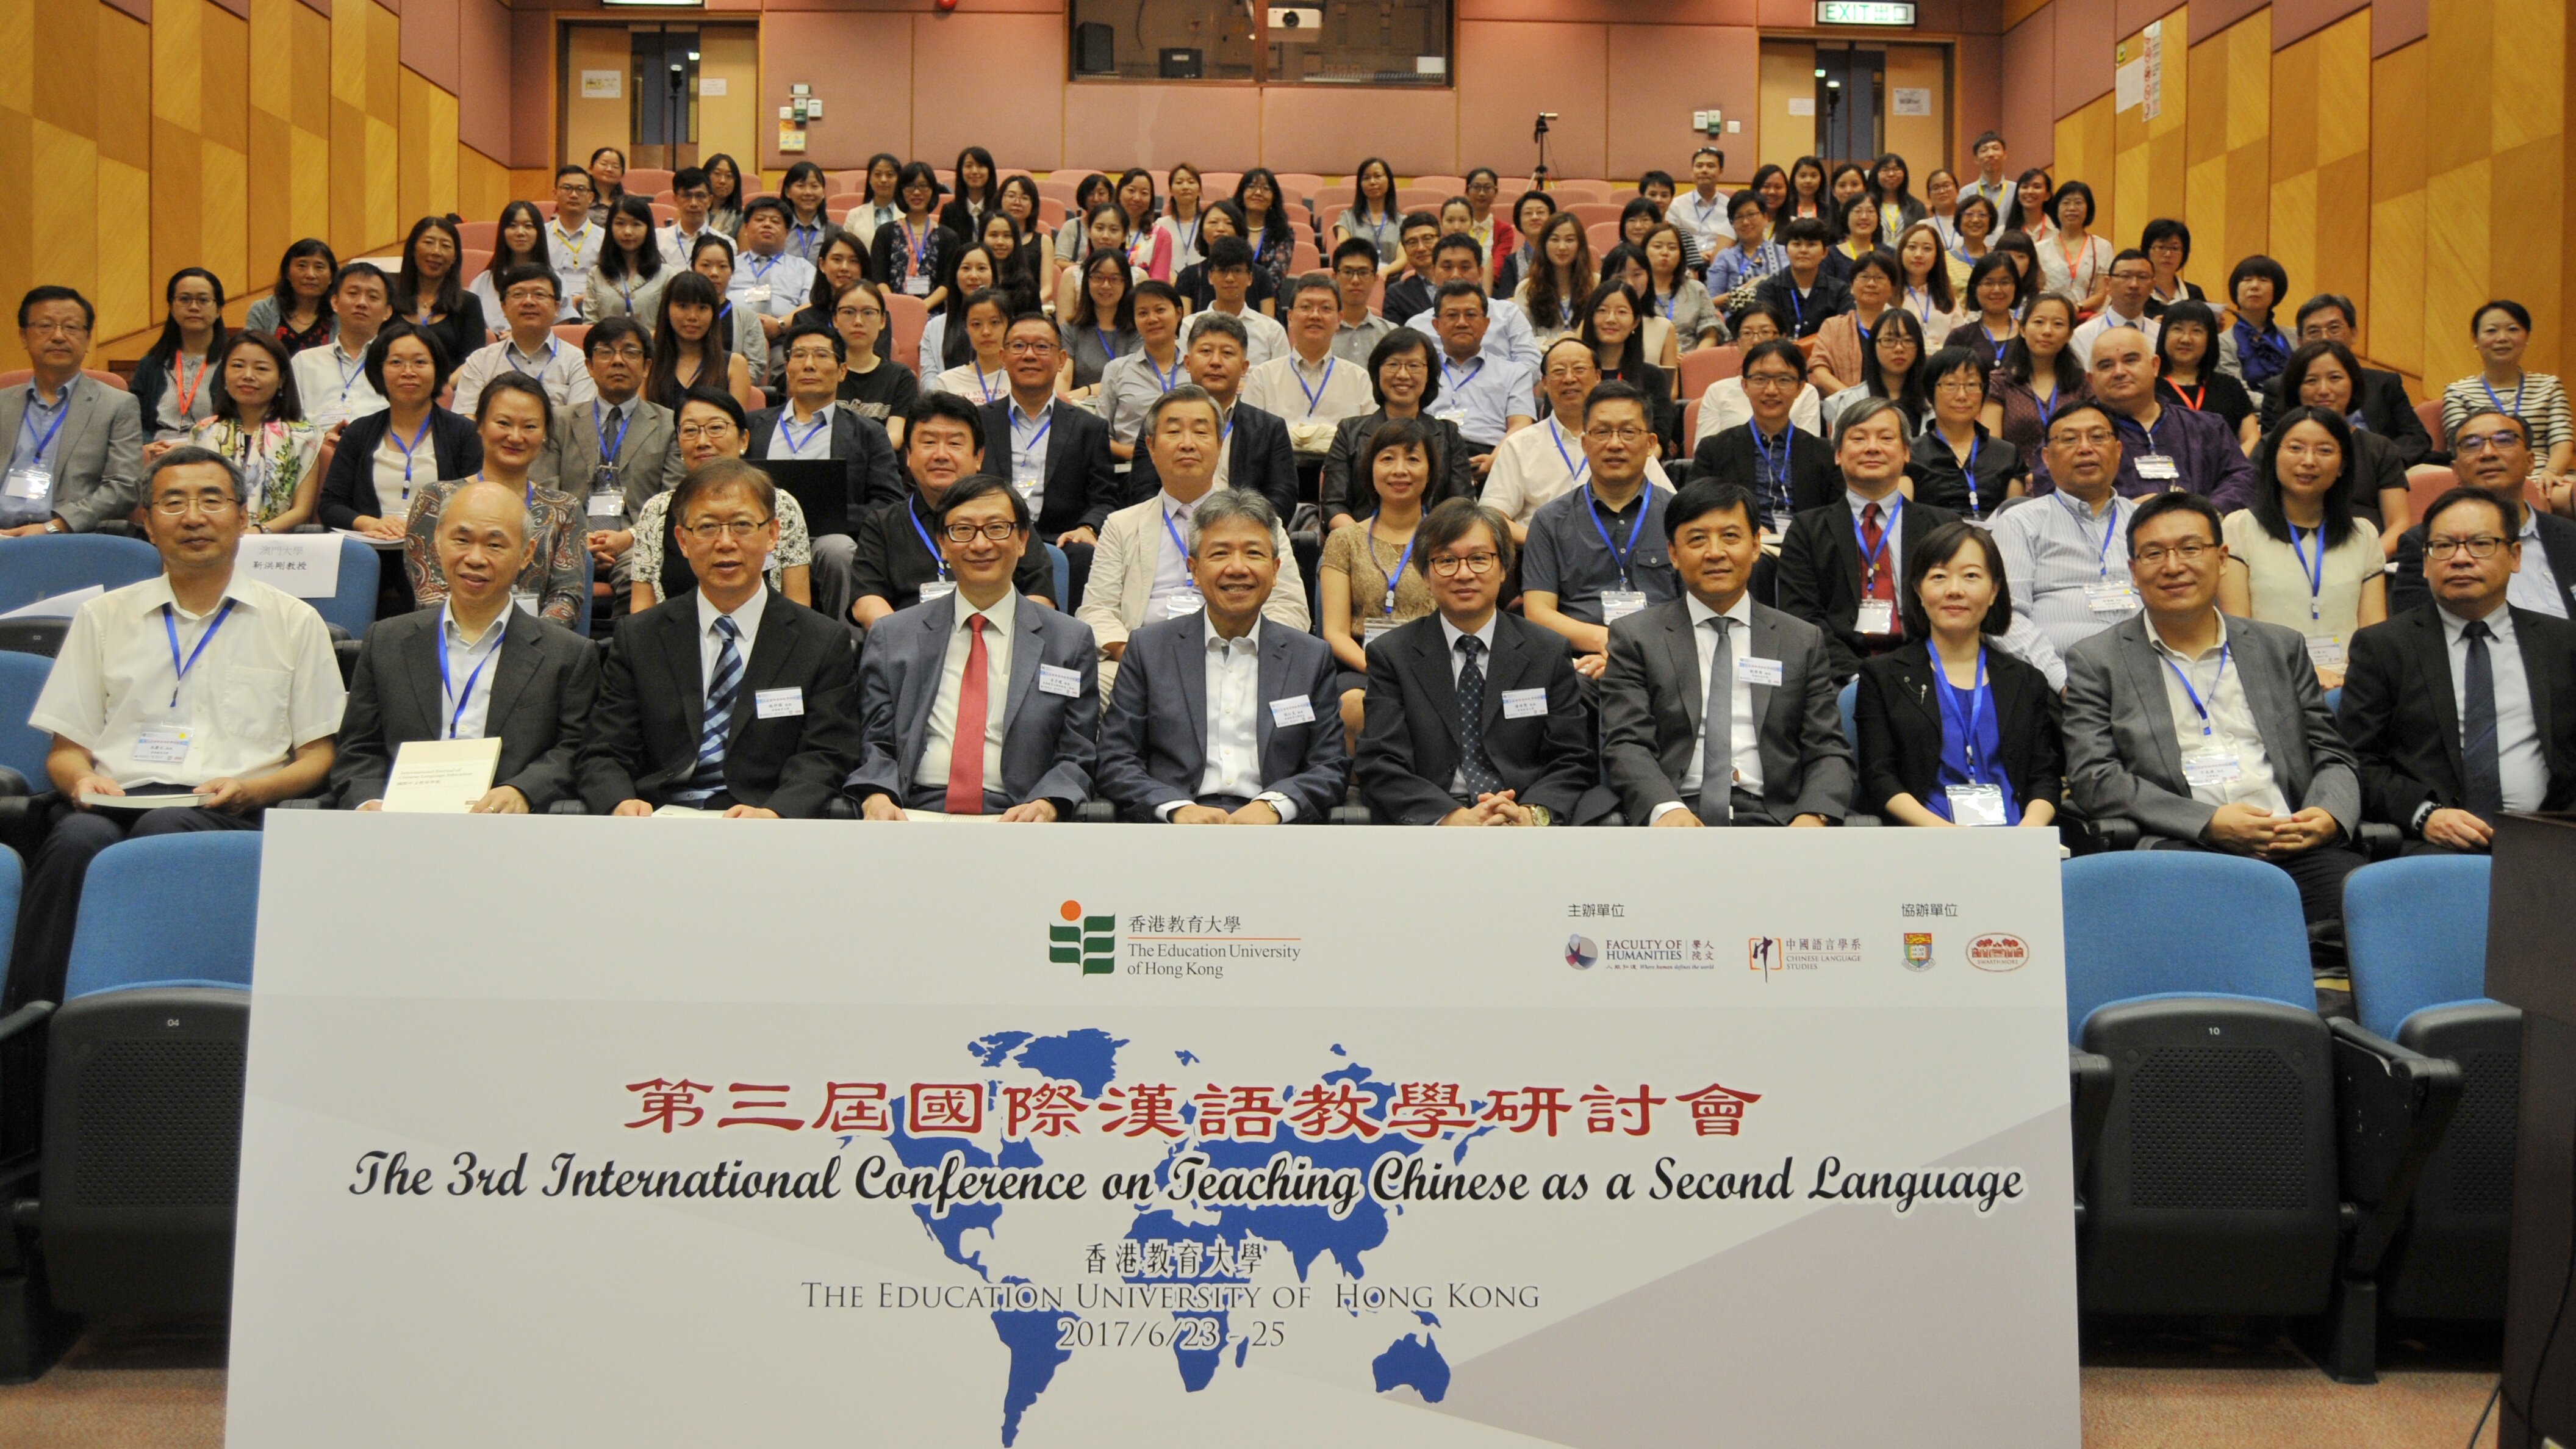 International Journal of Chinese Language Education